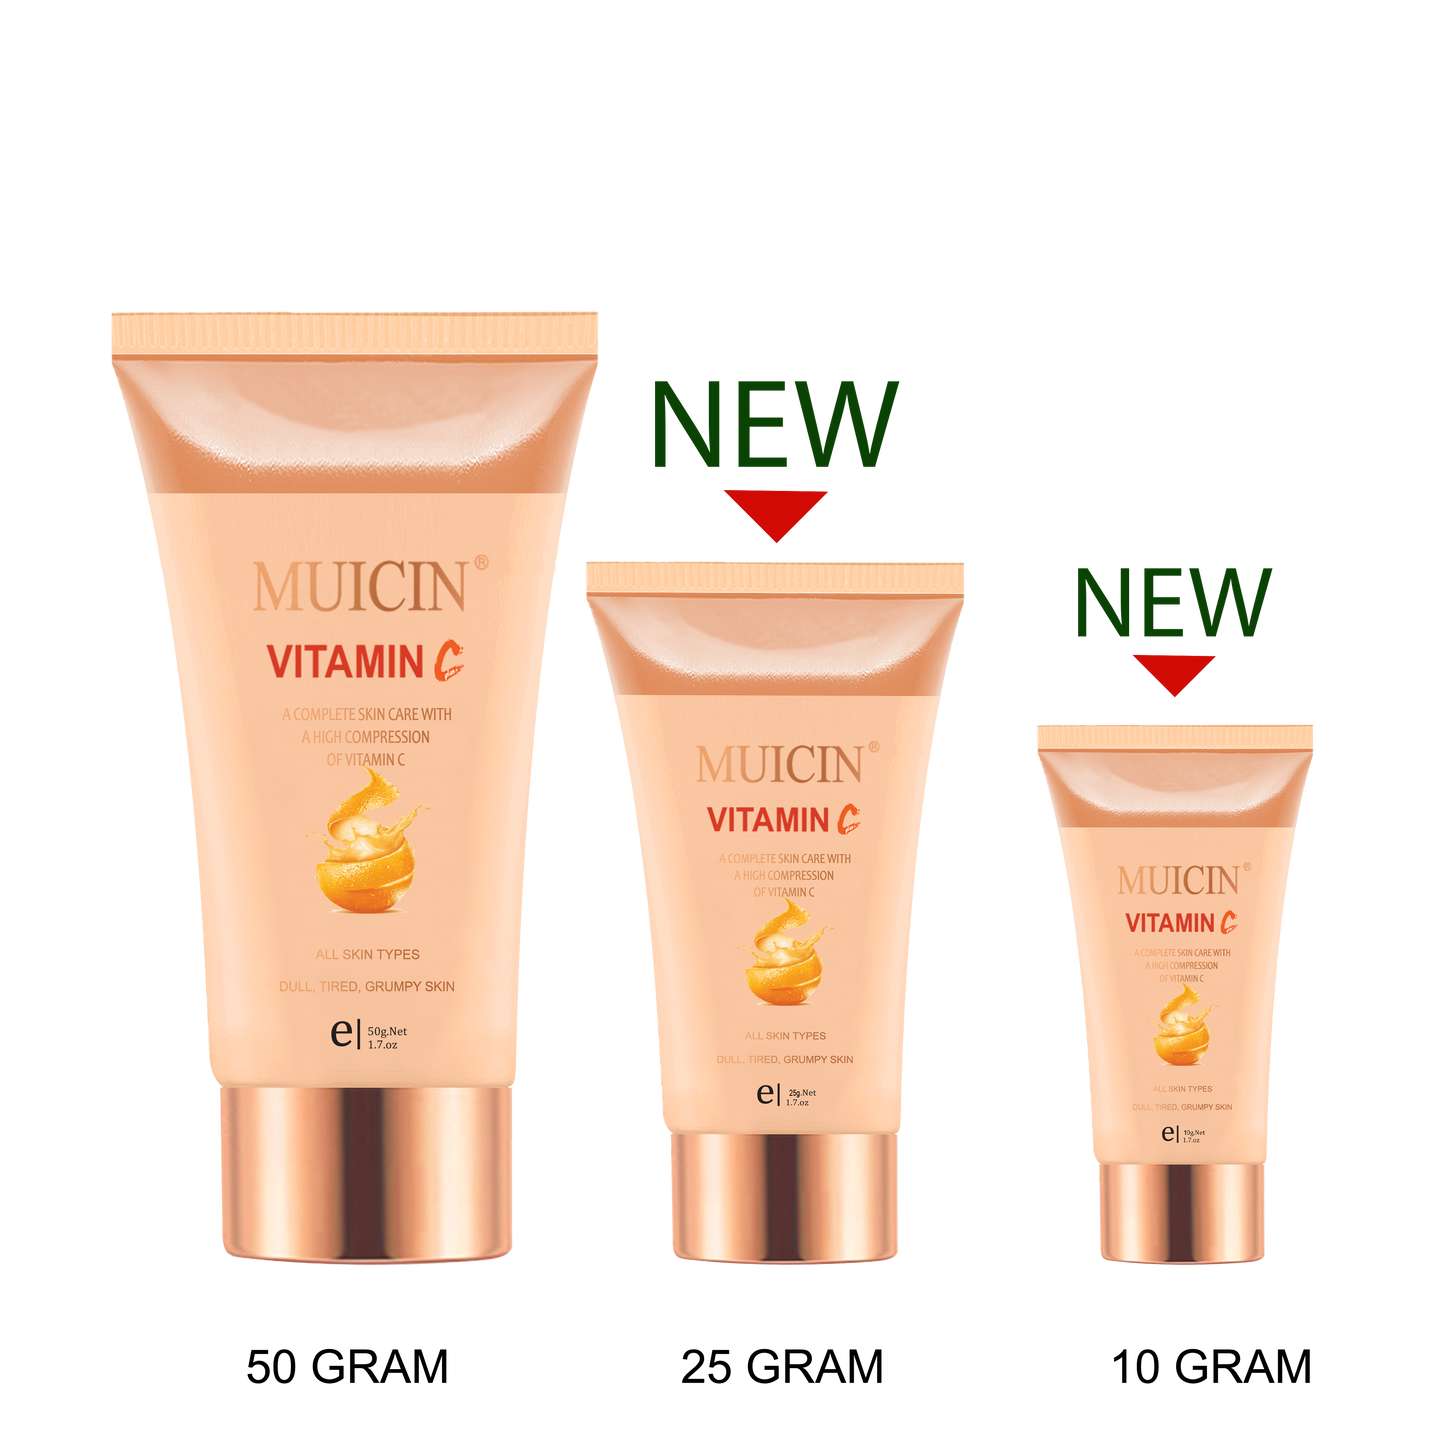 MUICIN - Vitamin C Foundation CC Cream Tube